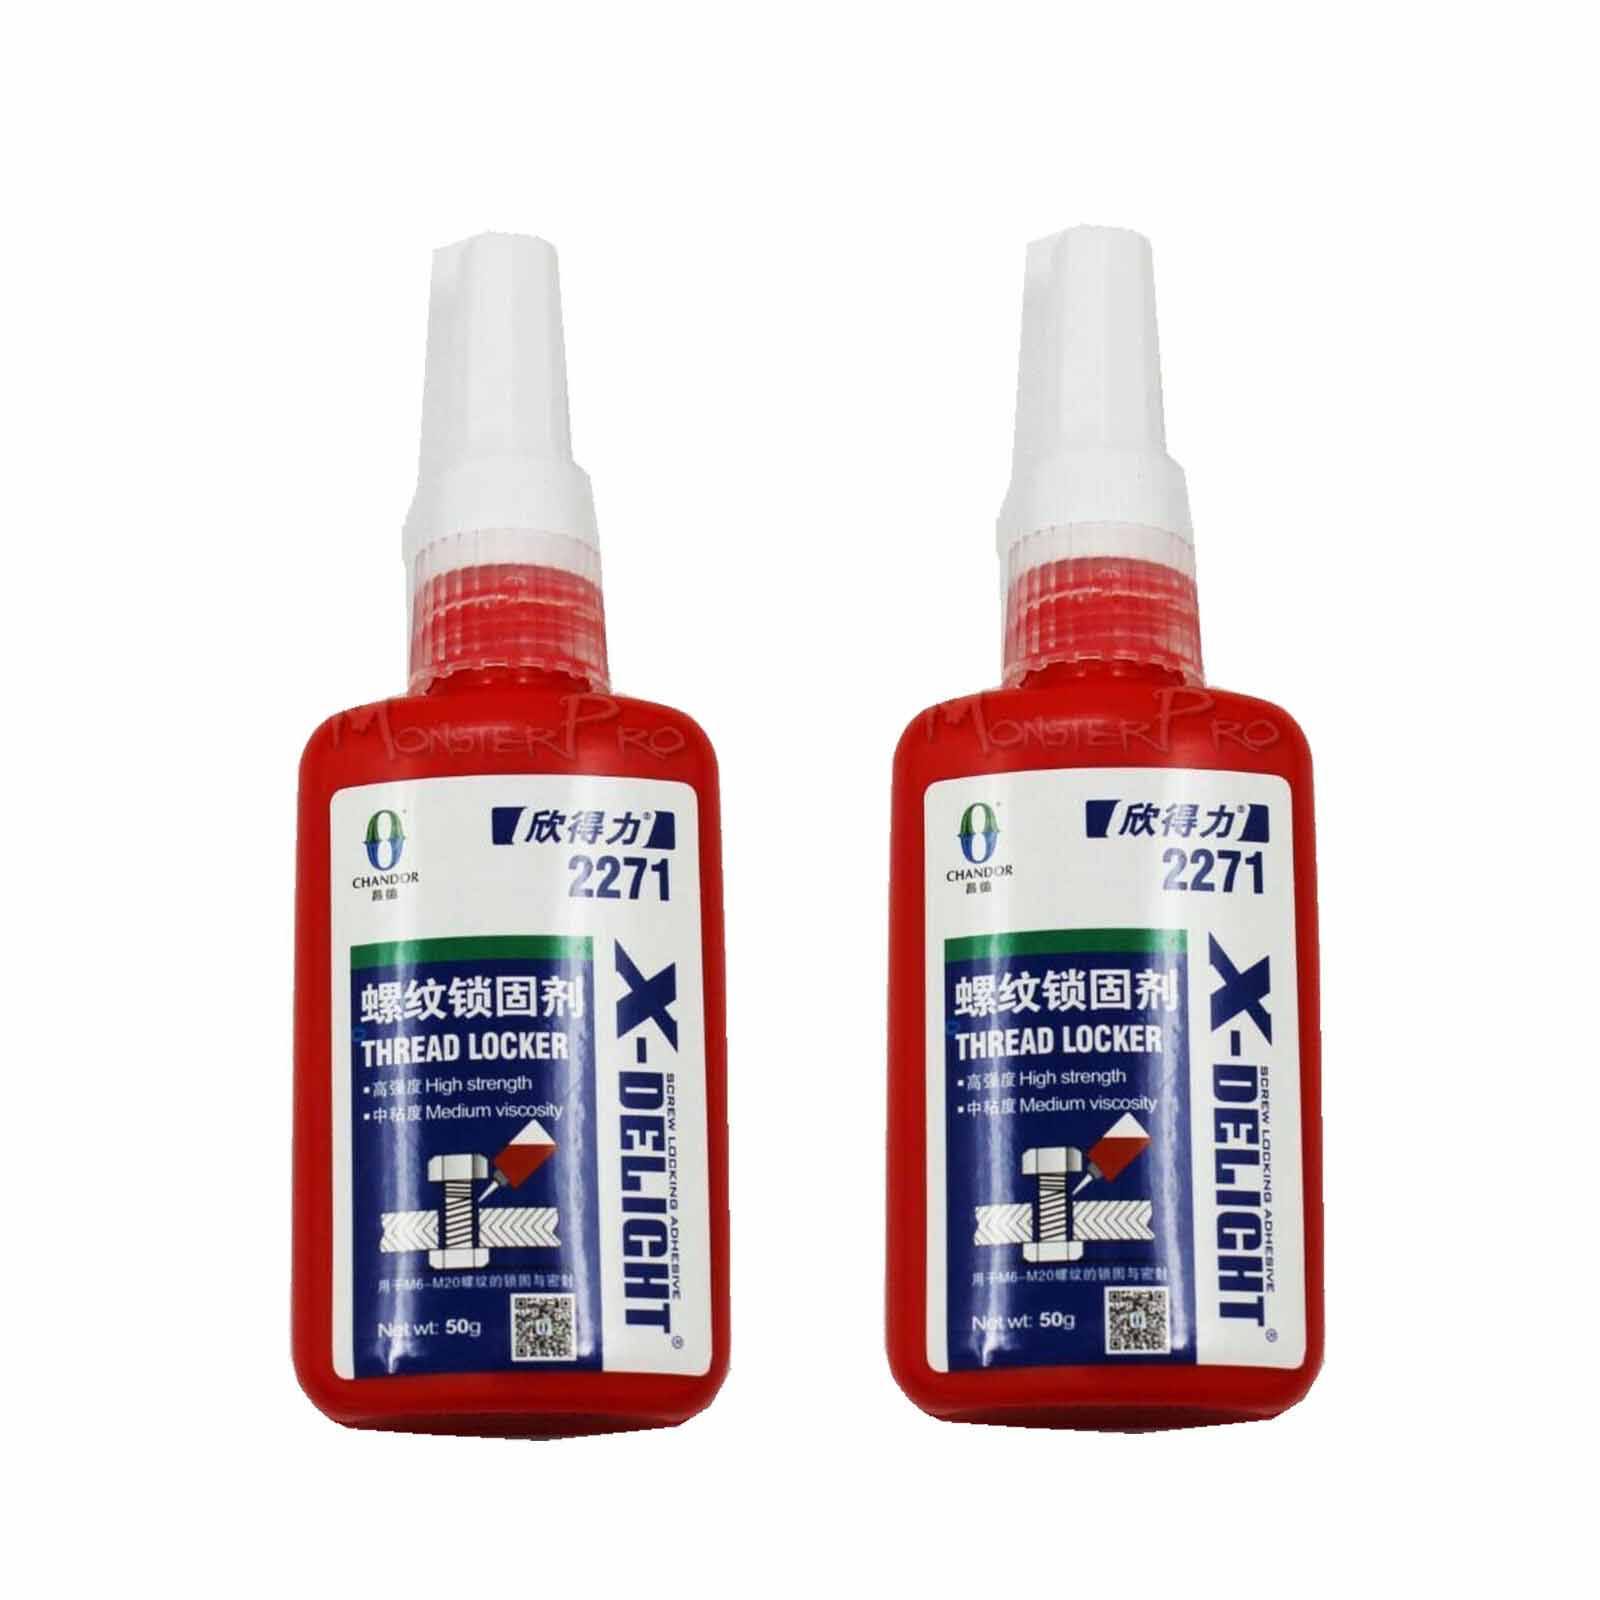 2 x Thread Locker Adhesive Sealant Glue Screw use Locktite Prevent Oxidation - TDRMOTO